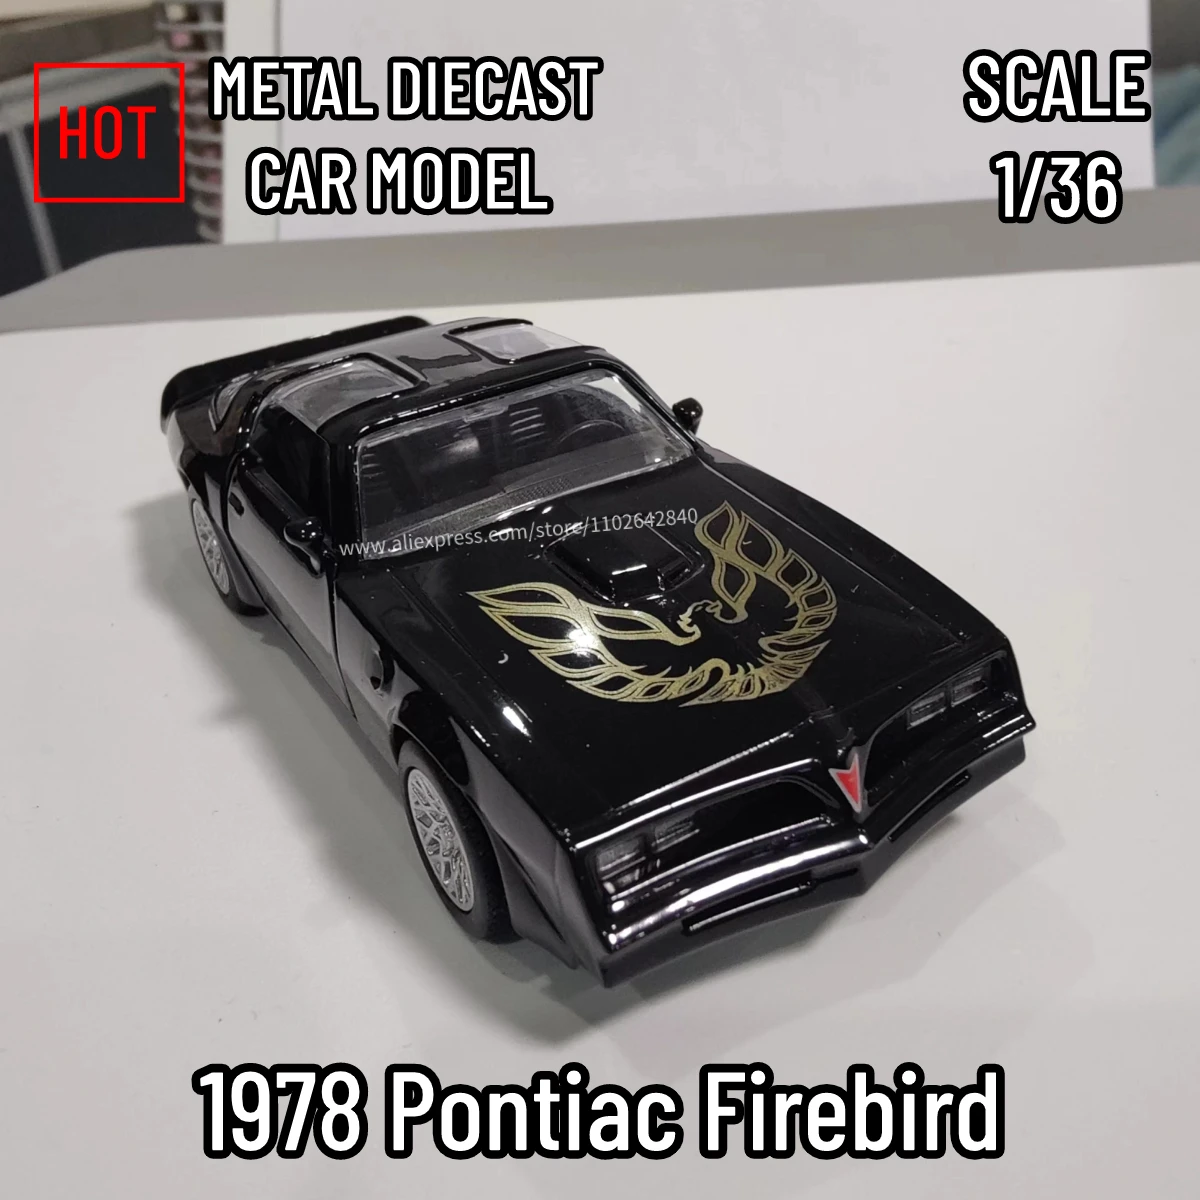 1/36 1978 Pontiac Fireabird Car Model Replica Scale Diecast Vehicle Collection Home Interior Decor Xmas Gift Kid Boy Toy